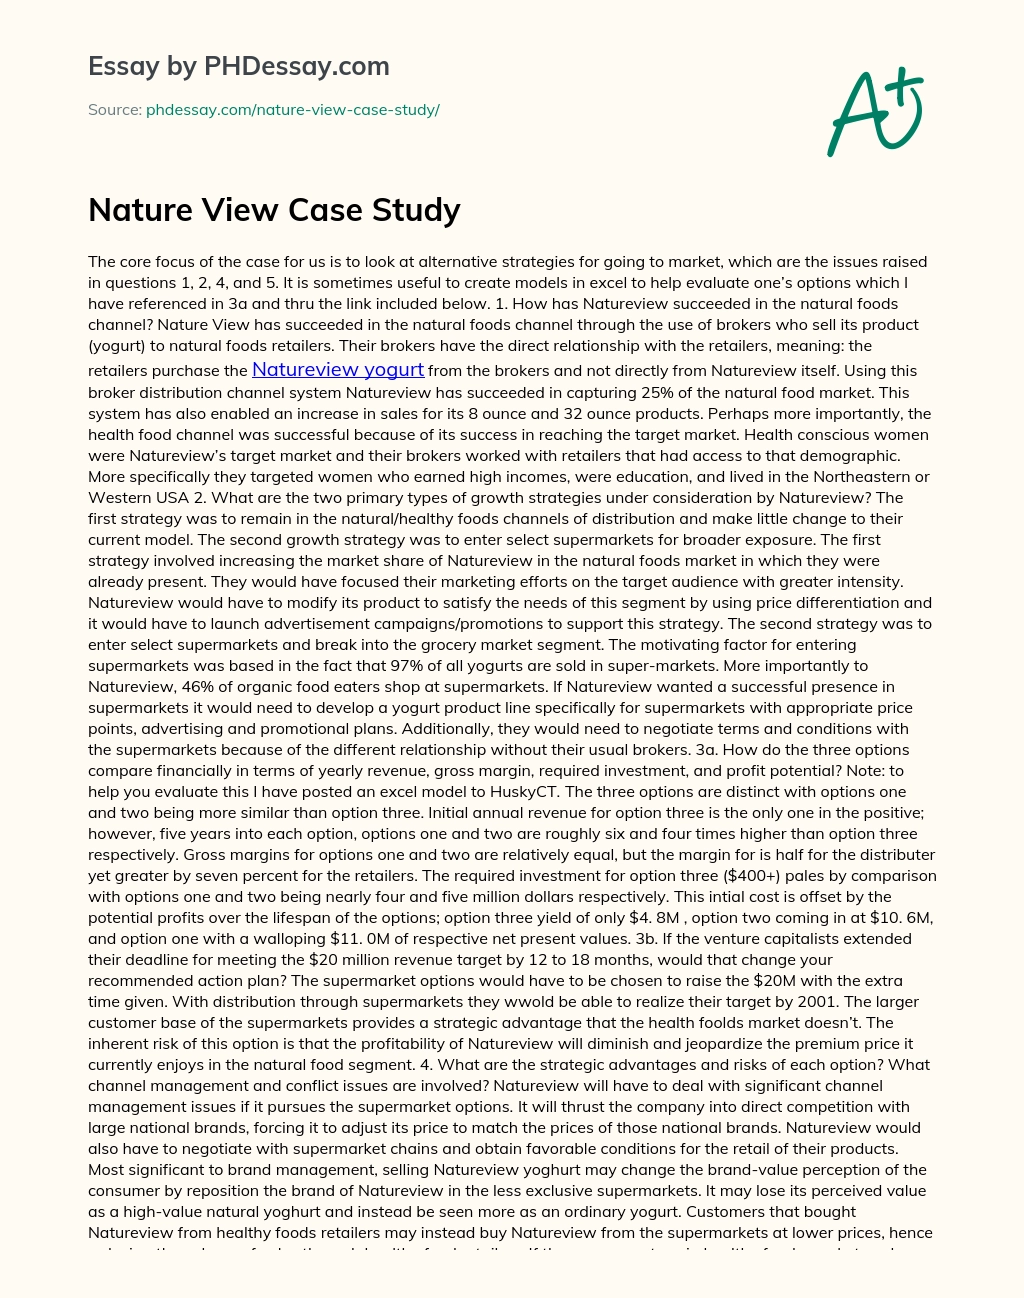 Nature View Case Study essay